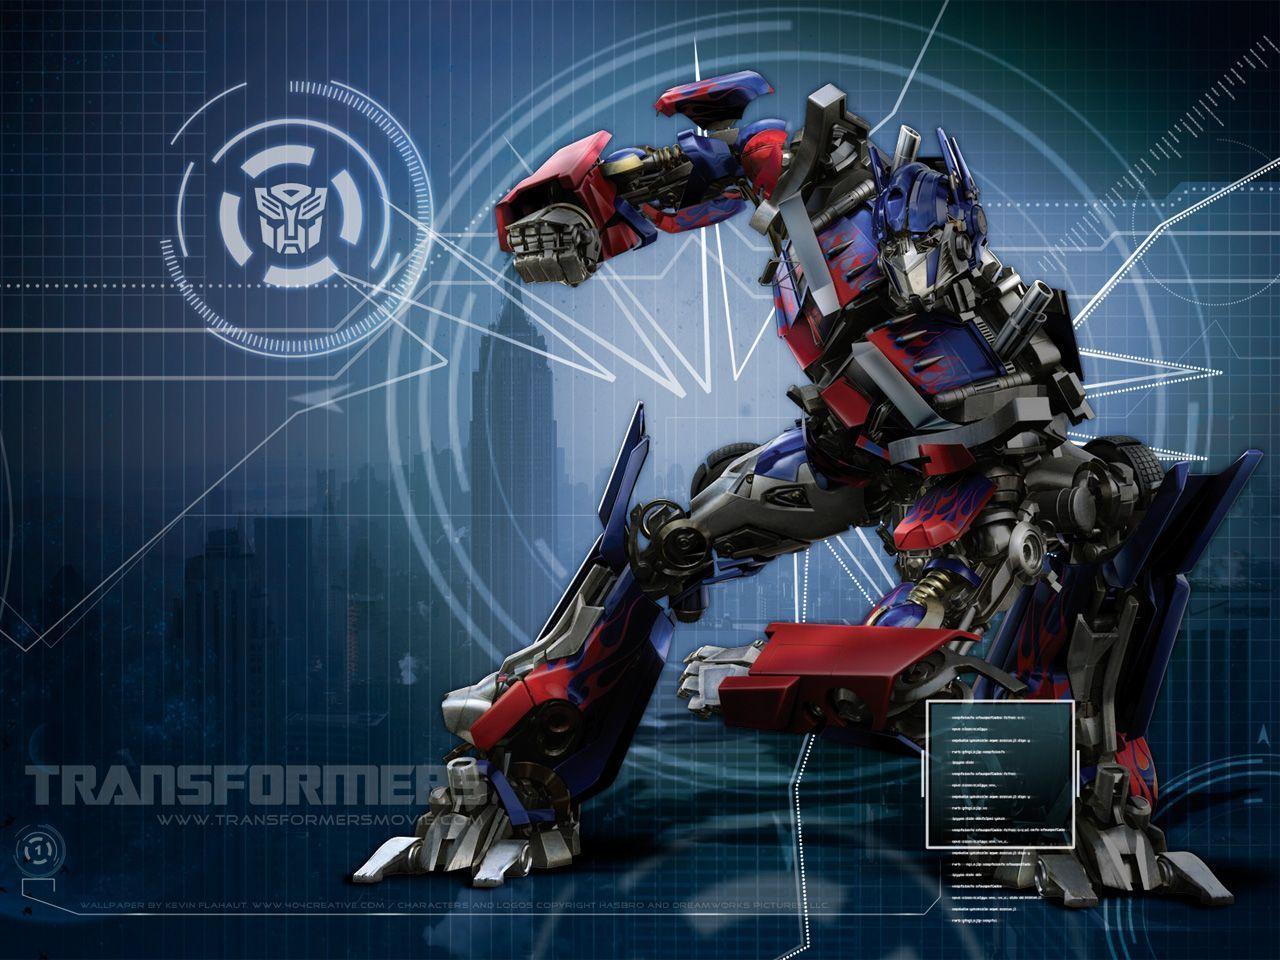 Transformers Wallpaper Download: Transformers Free